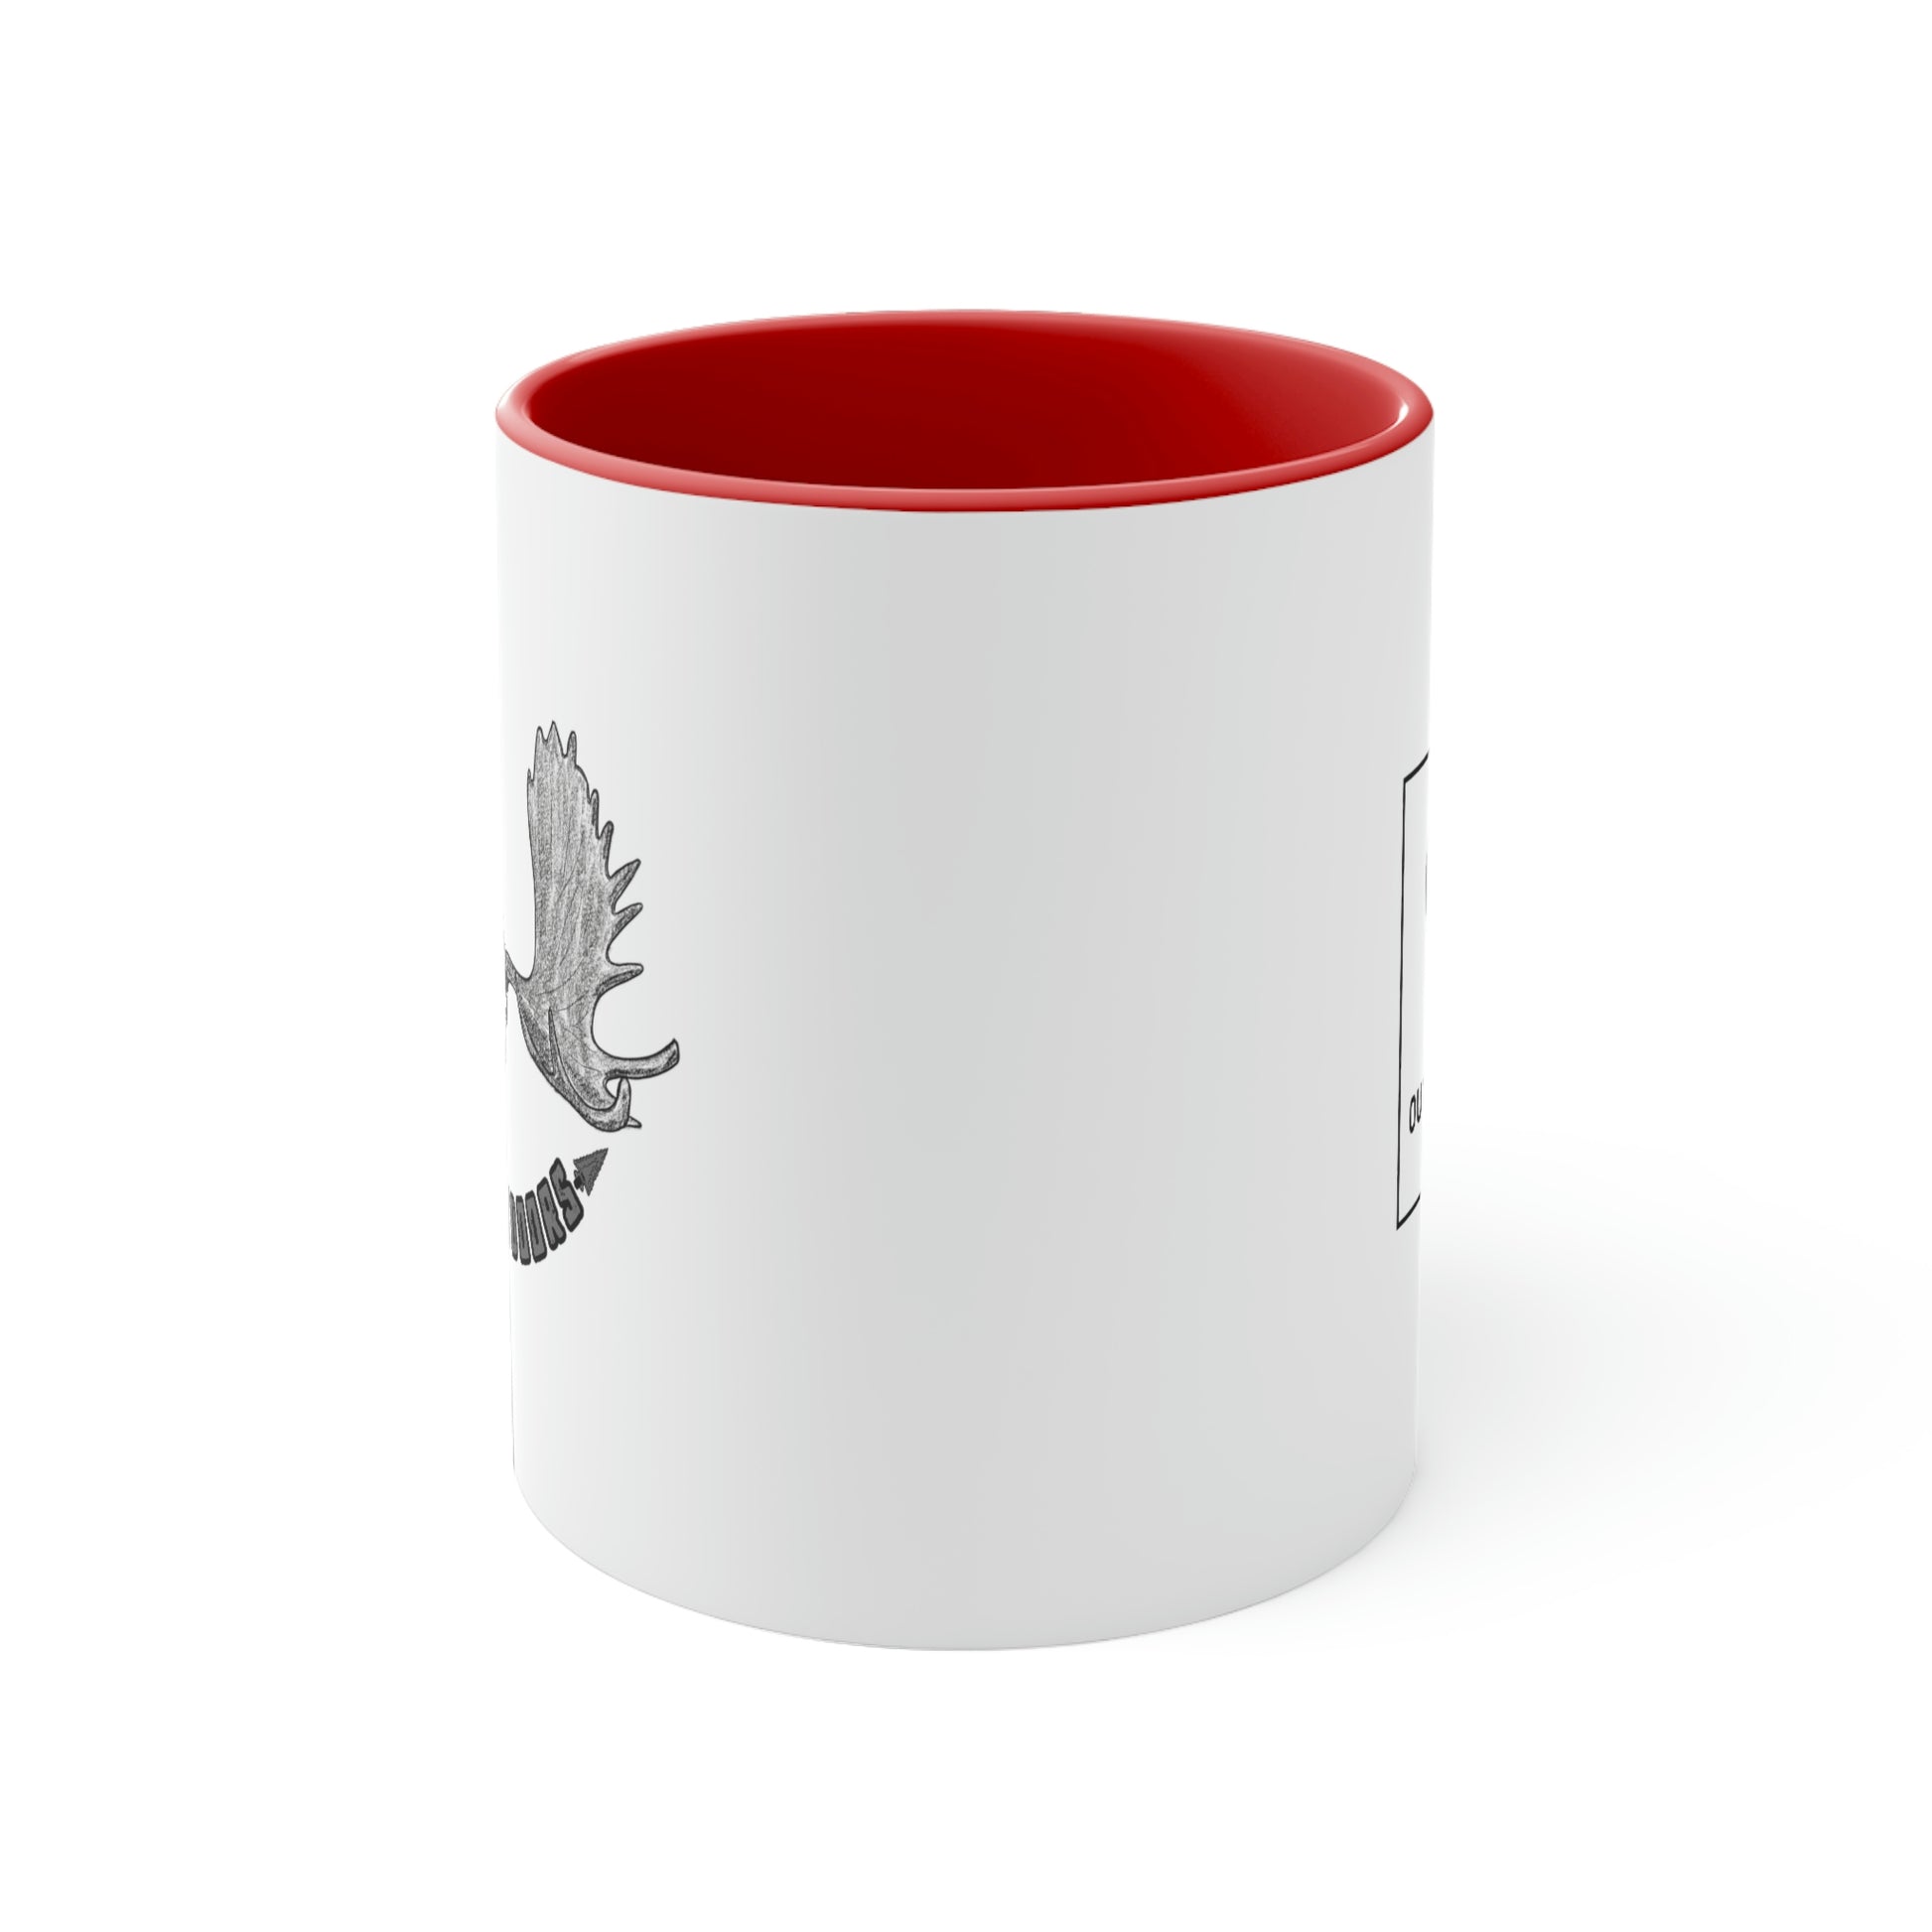 Moose Accent Coffee Mug, 11oz - 907Outdoors